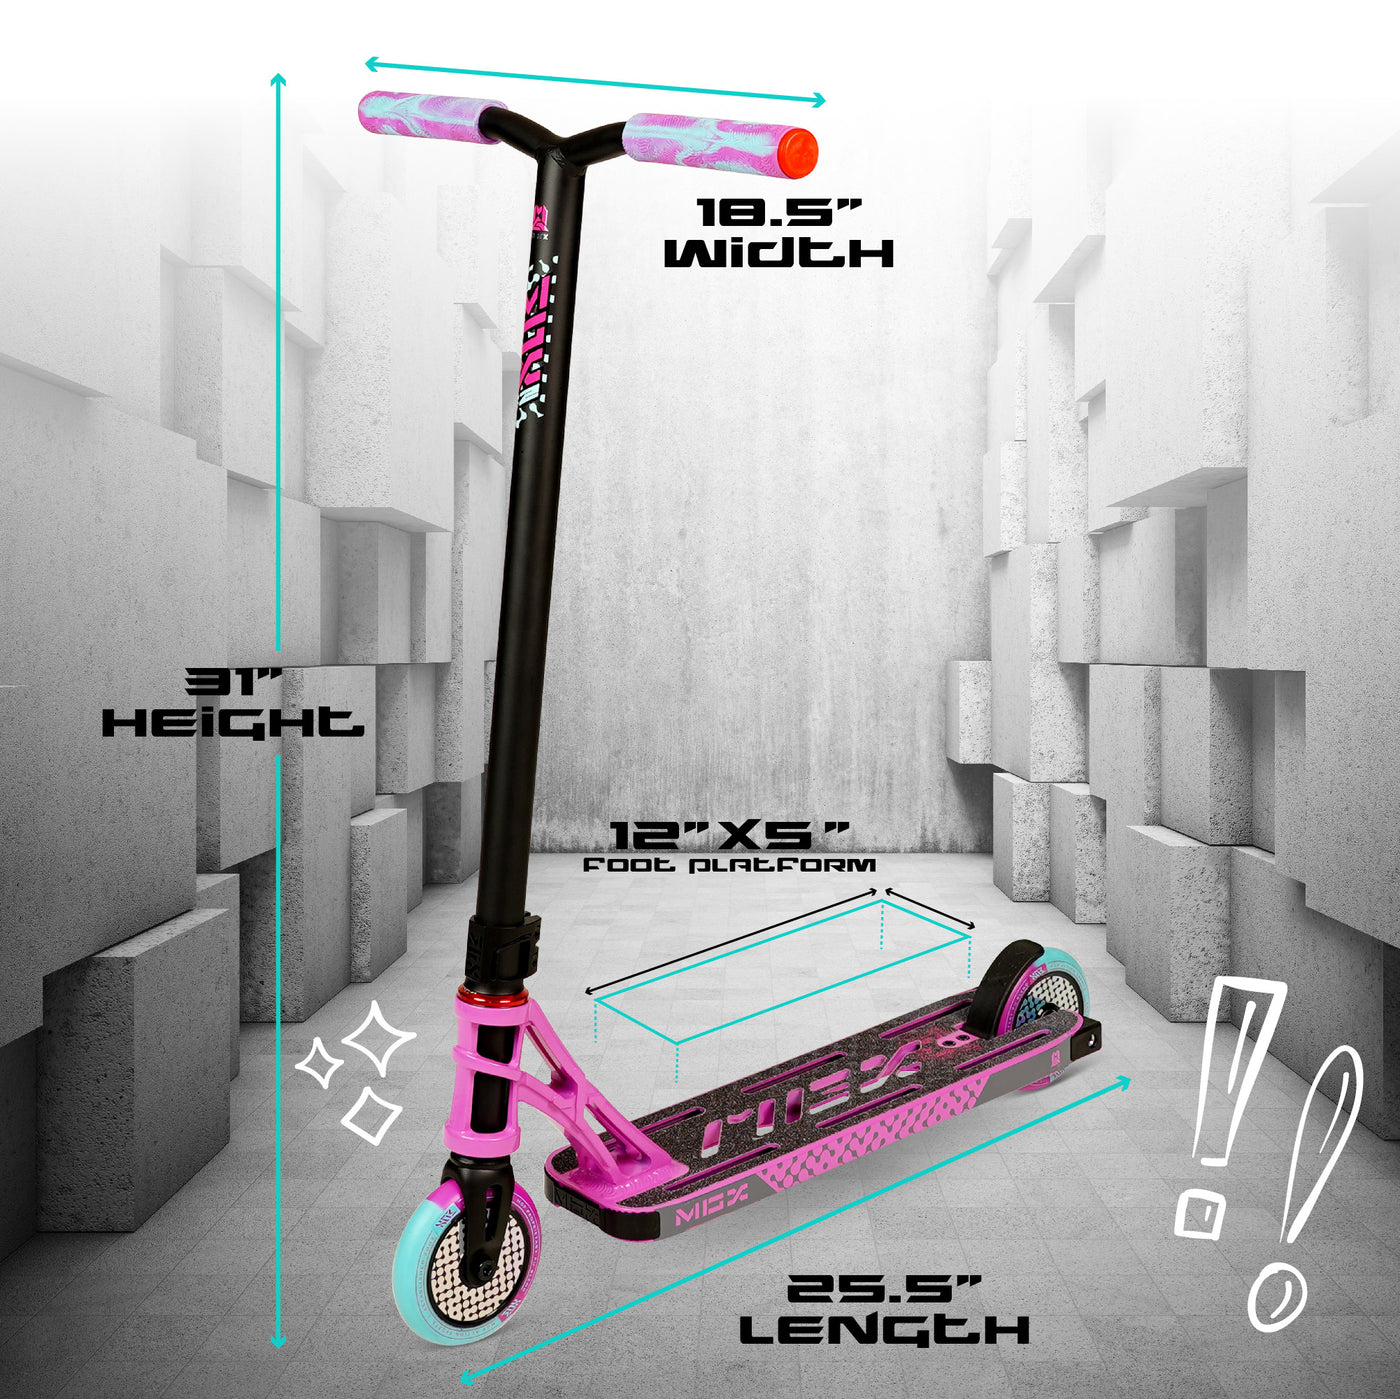 Madd Gear MGP MGX S2 Shredder Stunt Pro Scooter Complete High Quality Razor Trick Skate Park Mad Pink Teal Ripa Deck